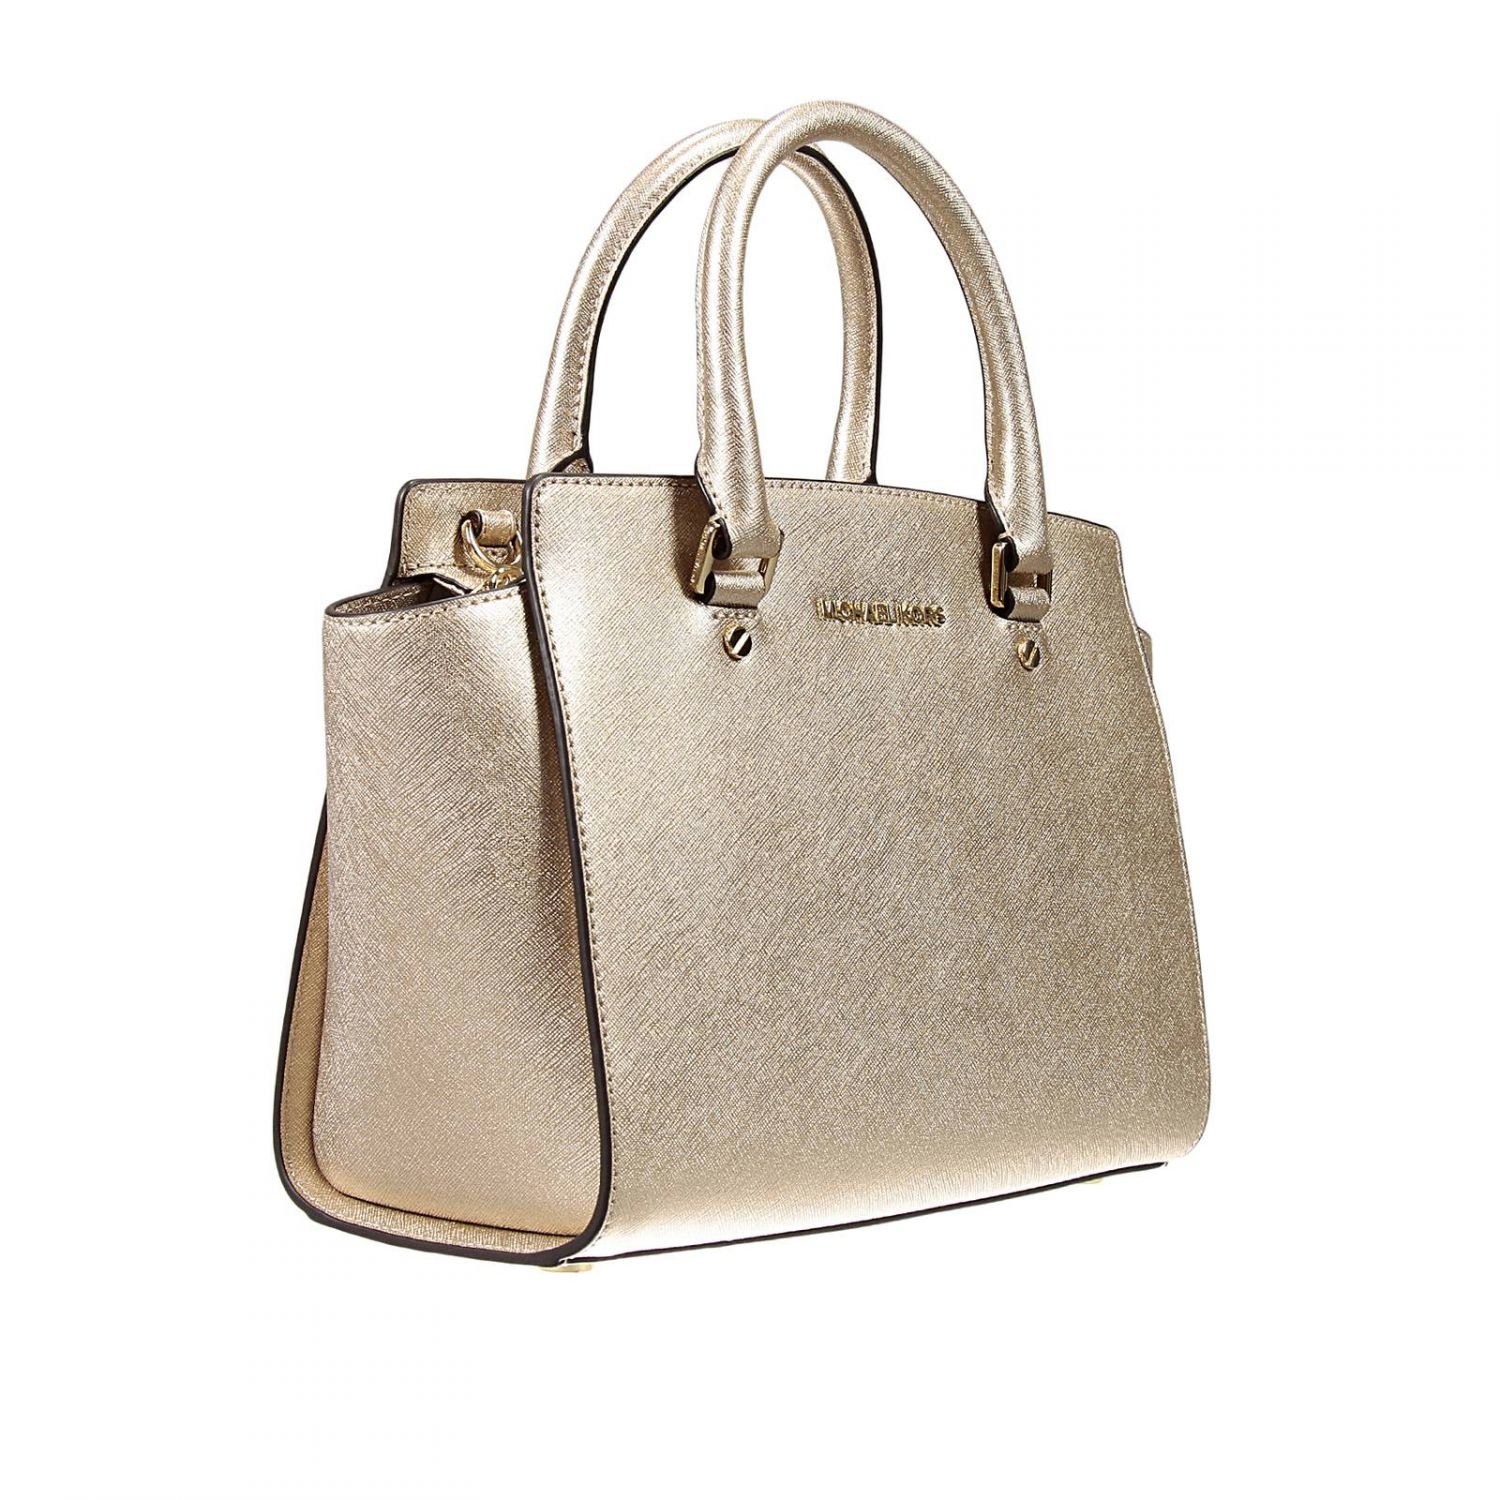 Michael Kors Women's Metallic Savannah Gold Large Tote Bag